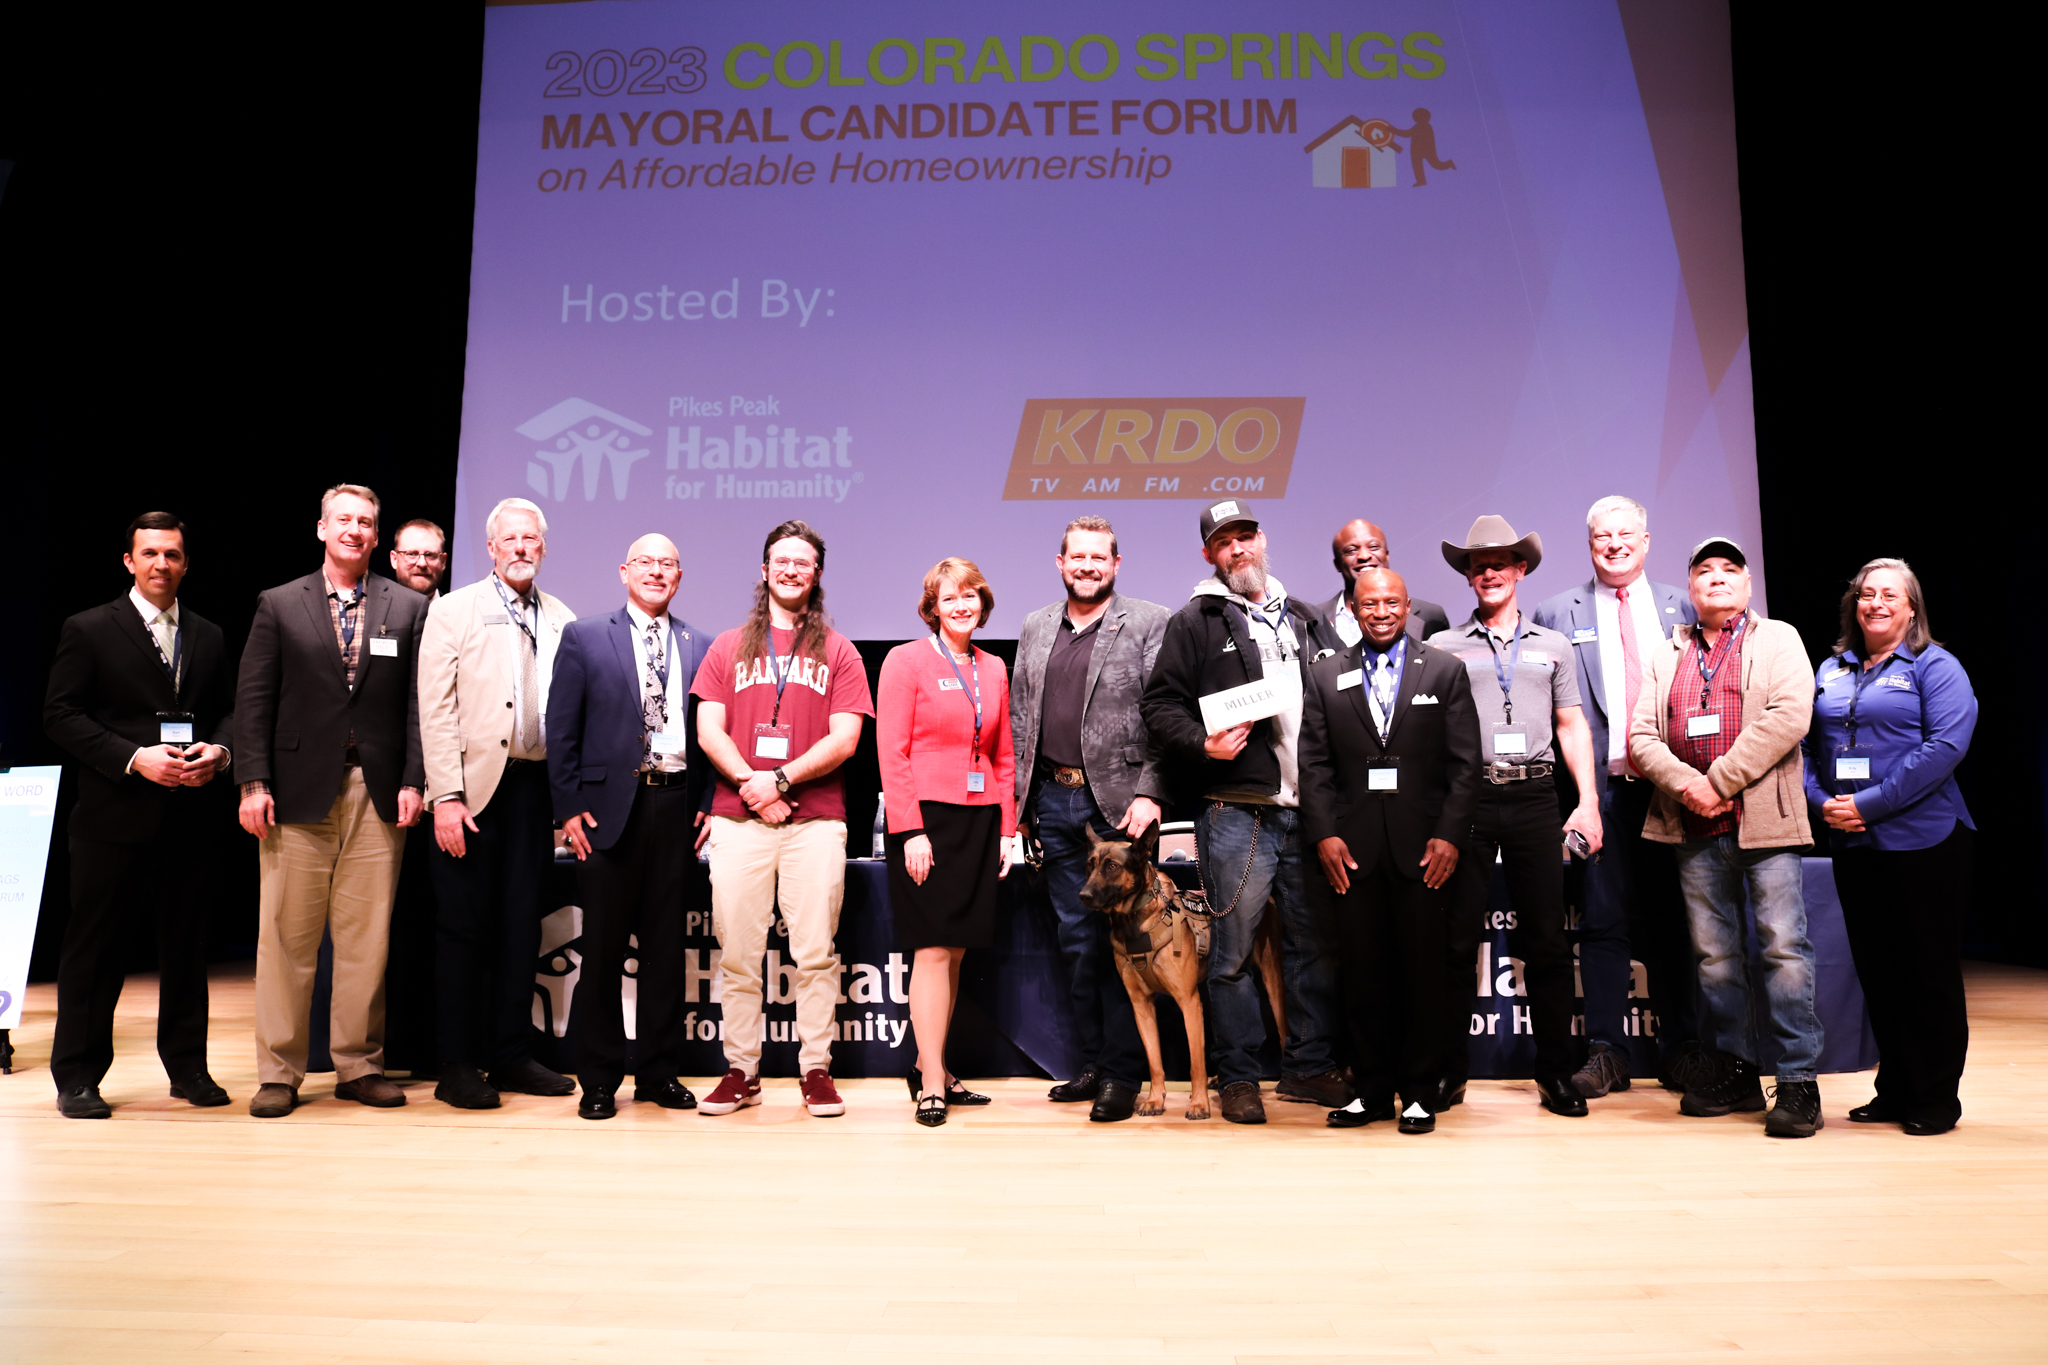 All 12 Colorado Springs mayoral candidates, plus forum moderators